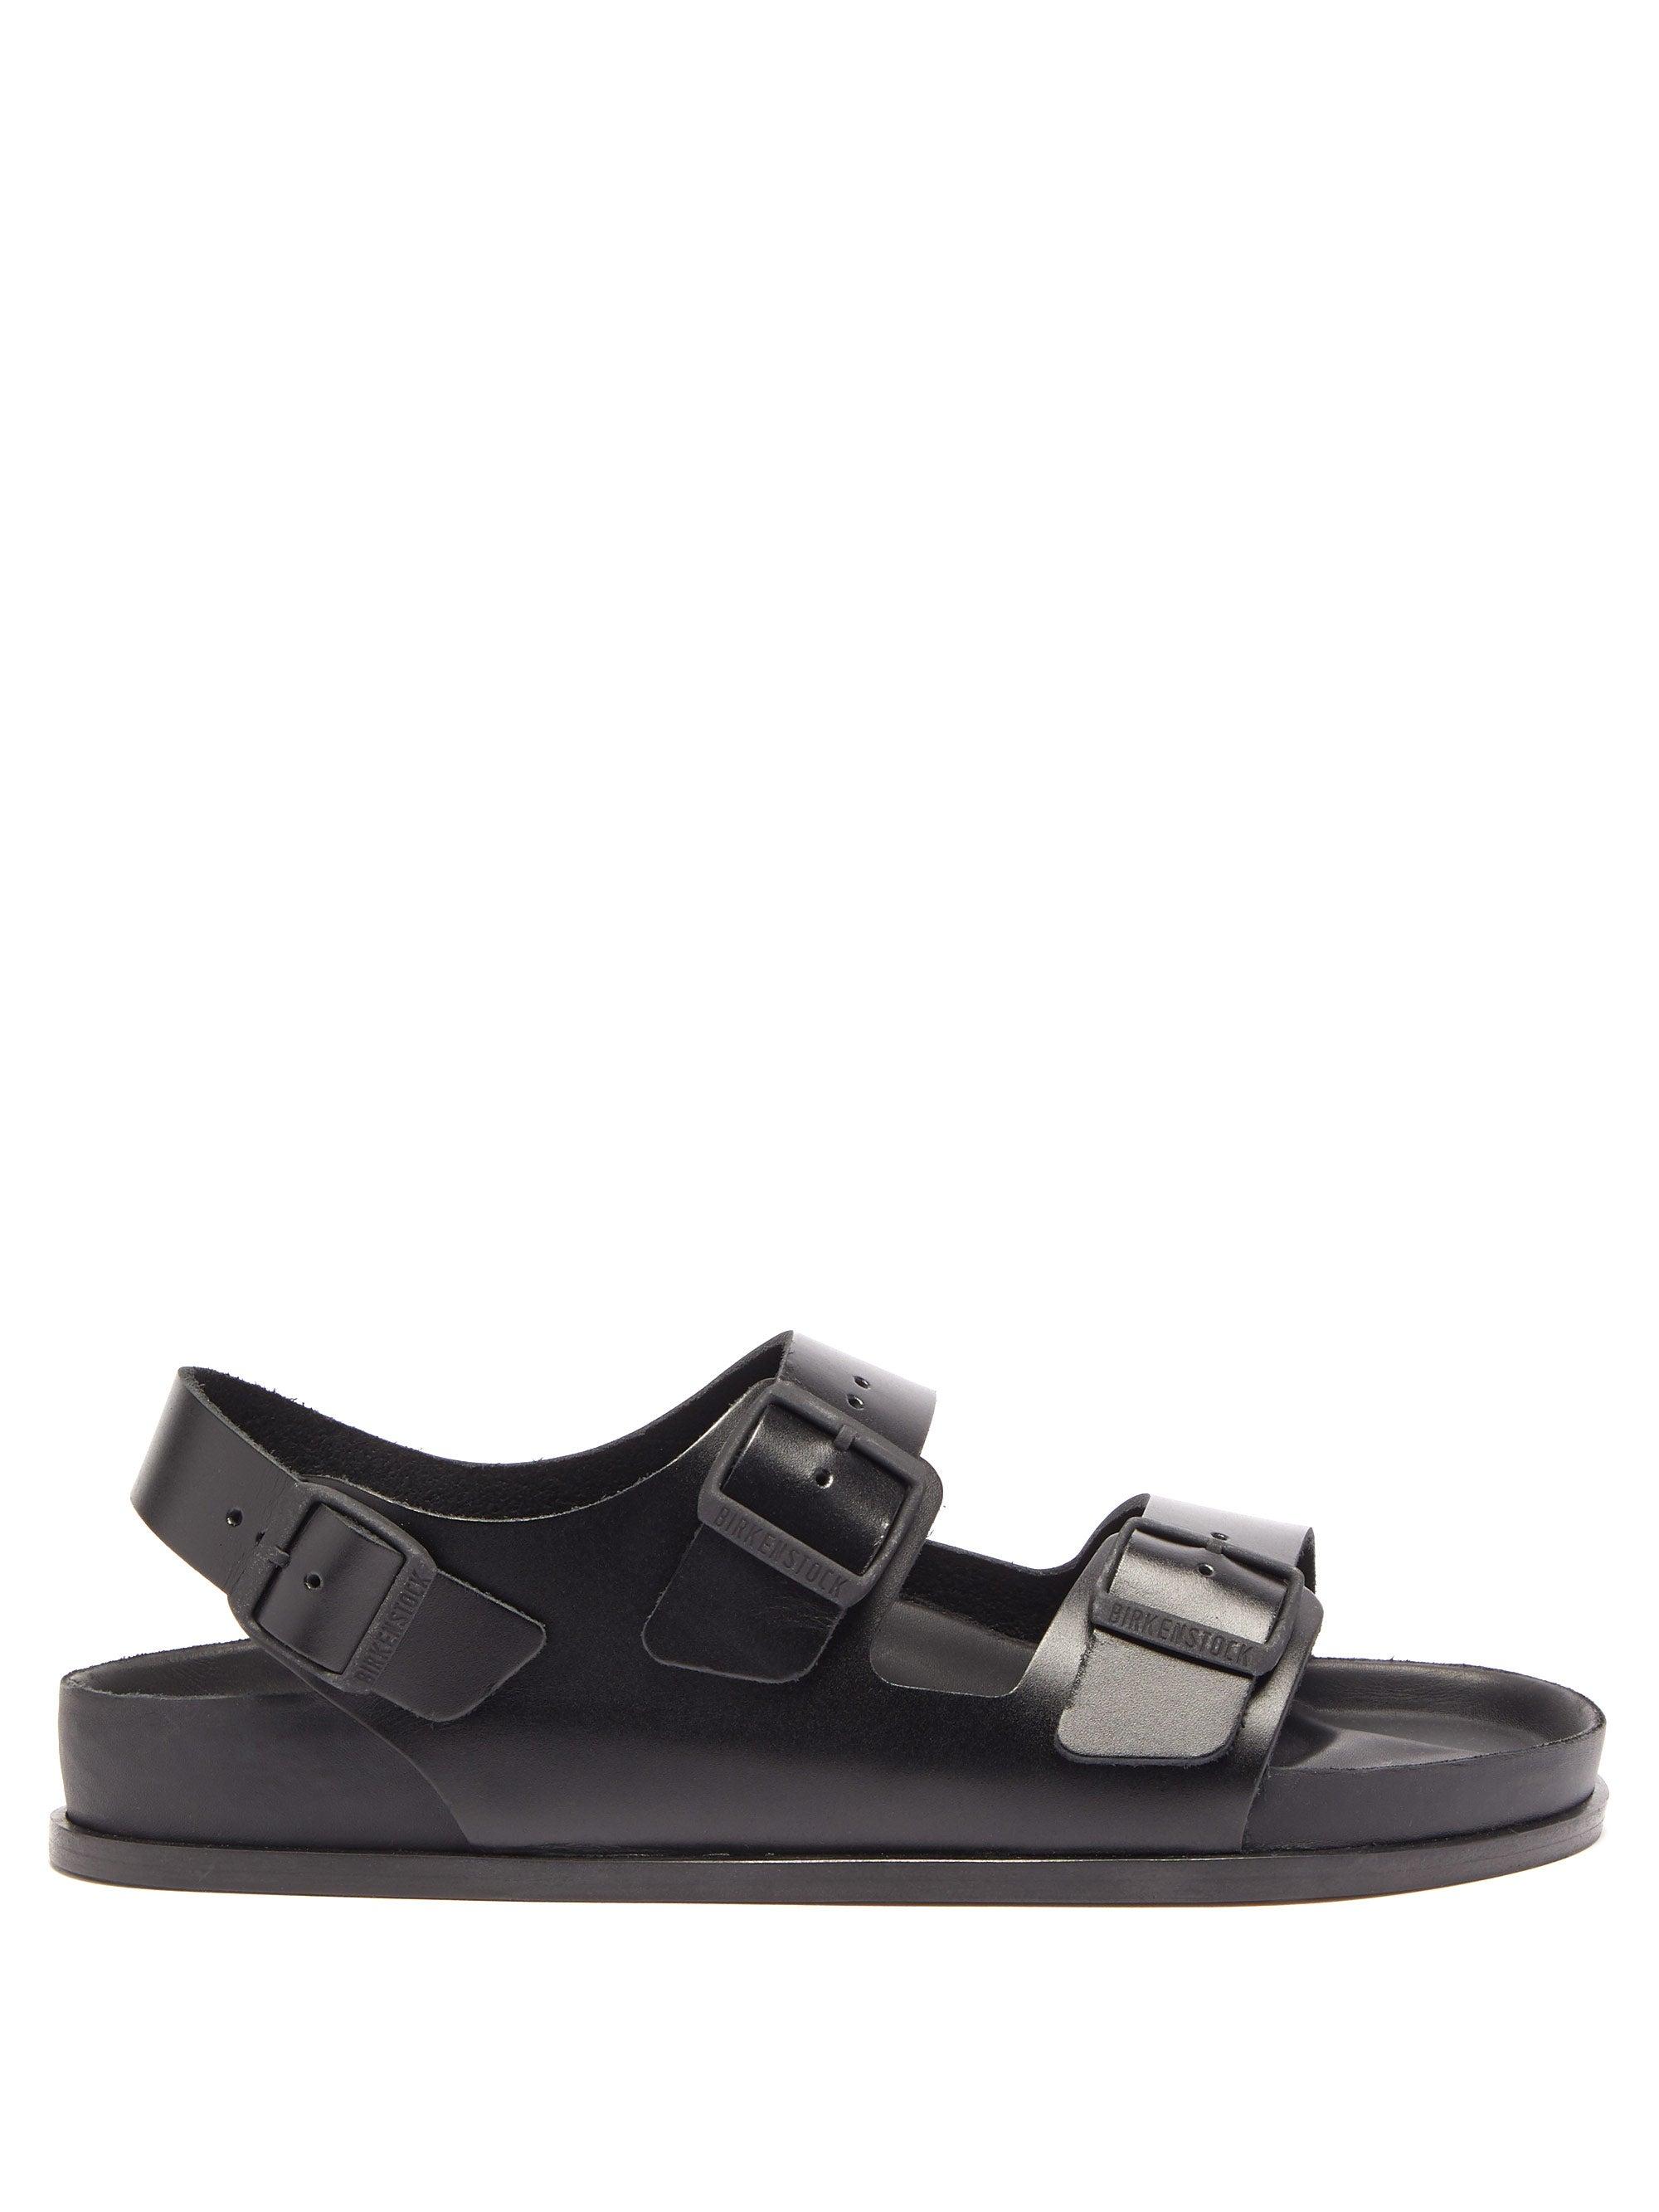 Birkenstock Milano Ankle-strap Leather Sandals in Black for Men - Lyst